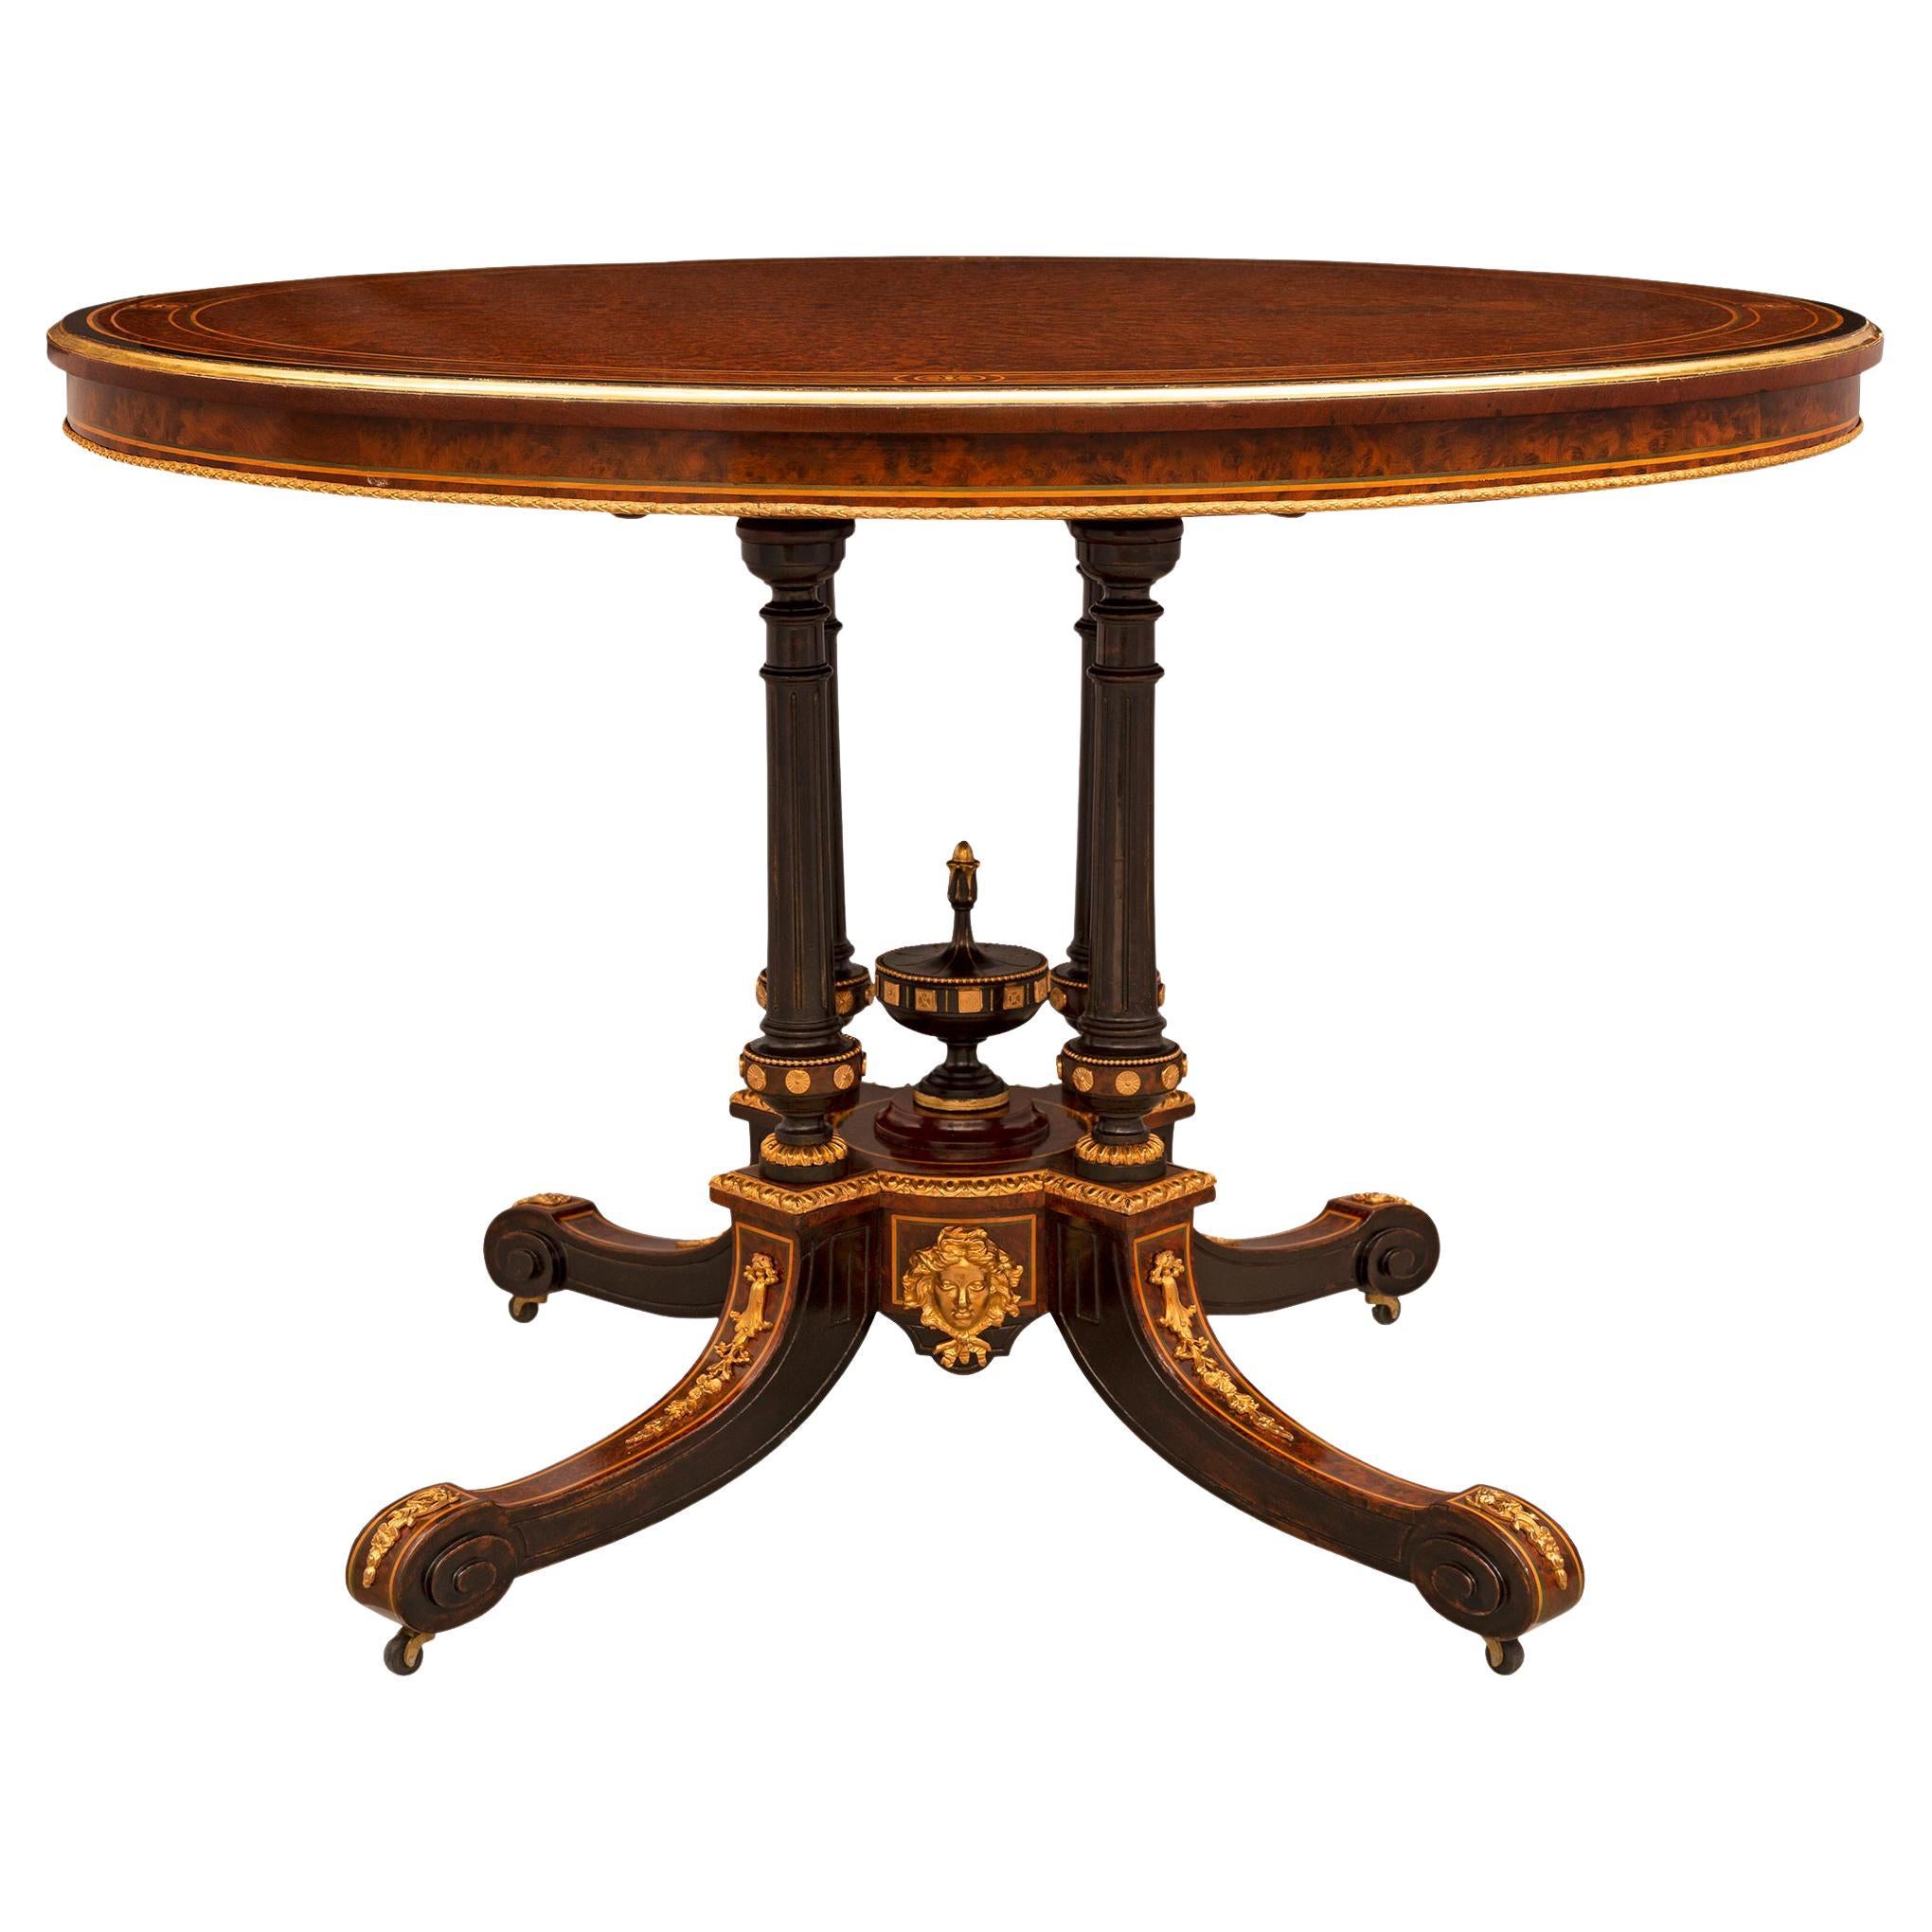 English 19th Century Burl Walnut and Ormolu Tilt-Top Center Table